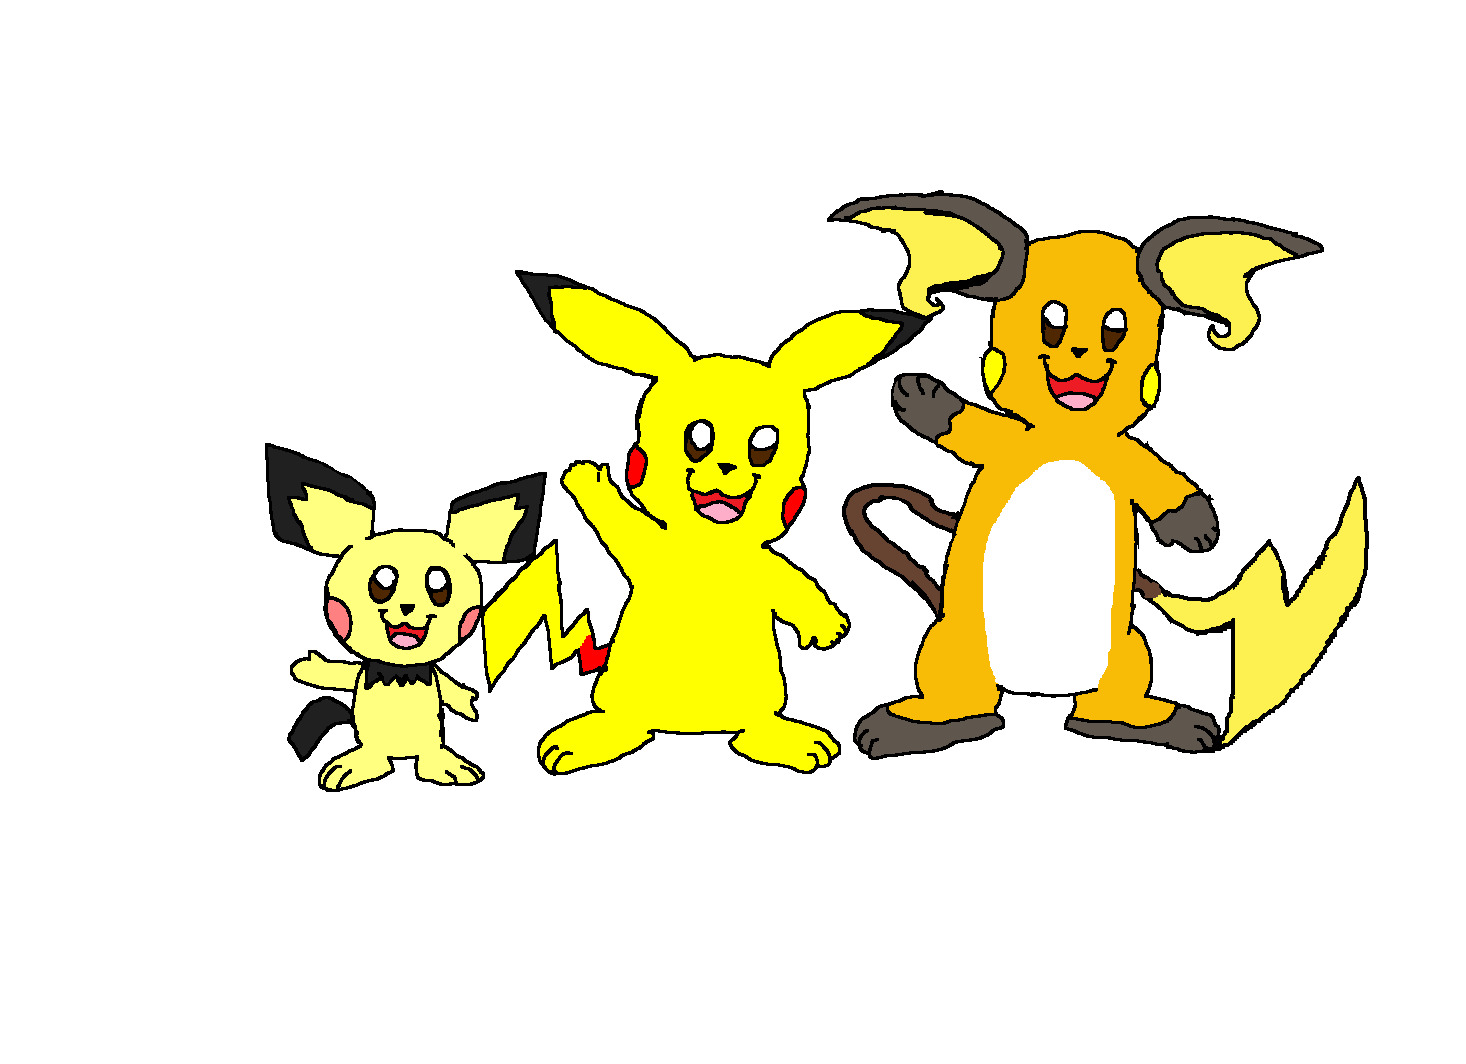 Pichu Pikachu and Raichu from Pokémon 